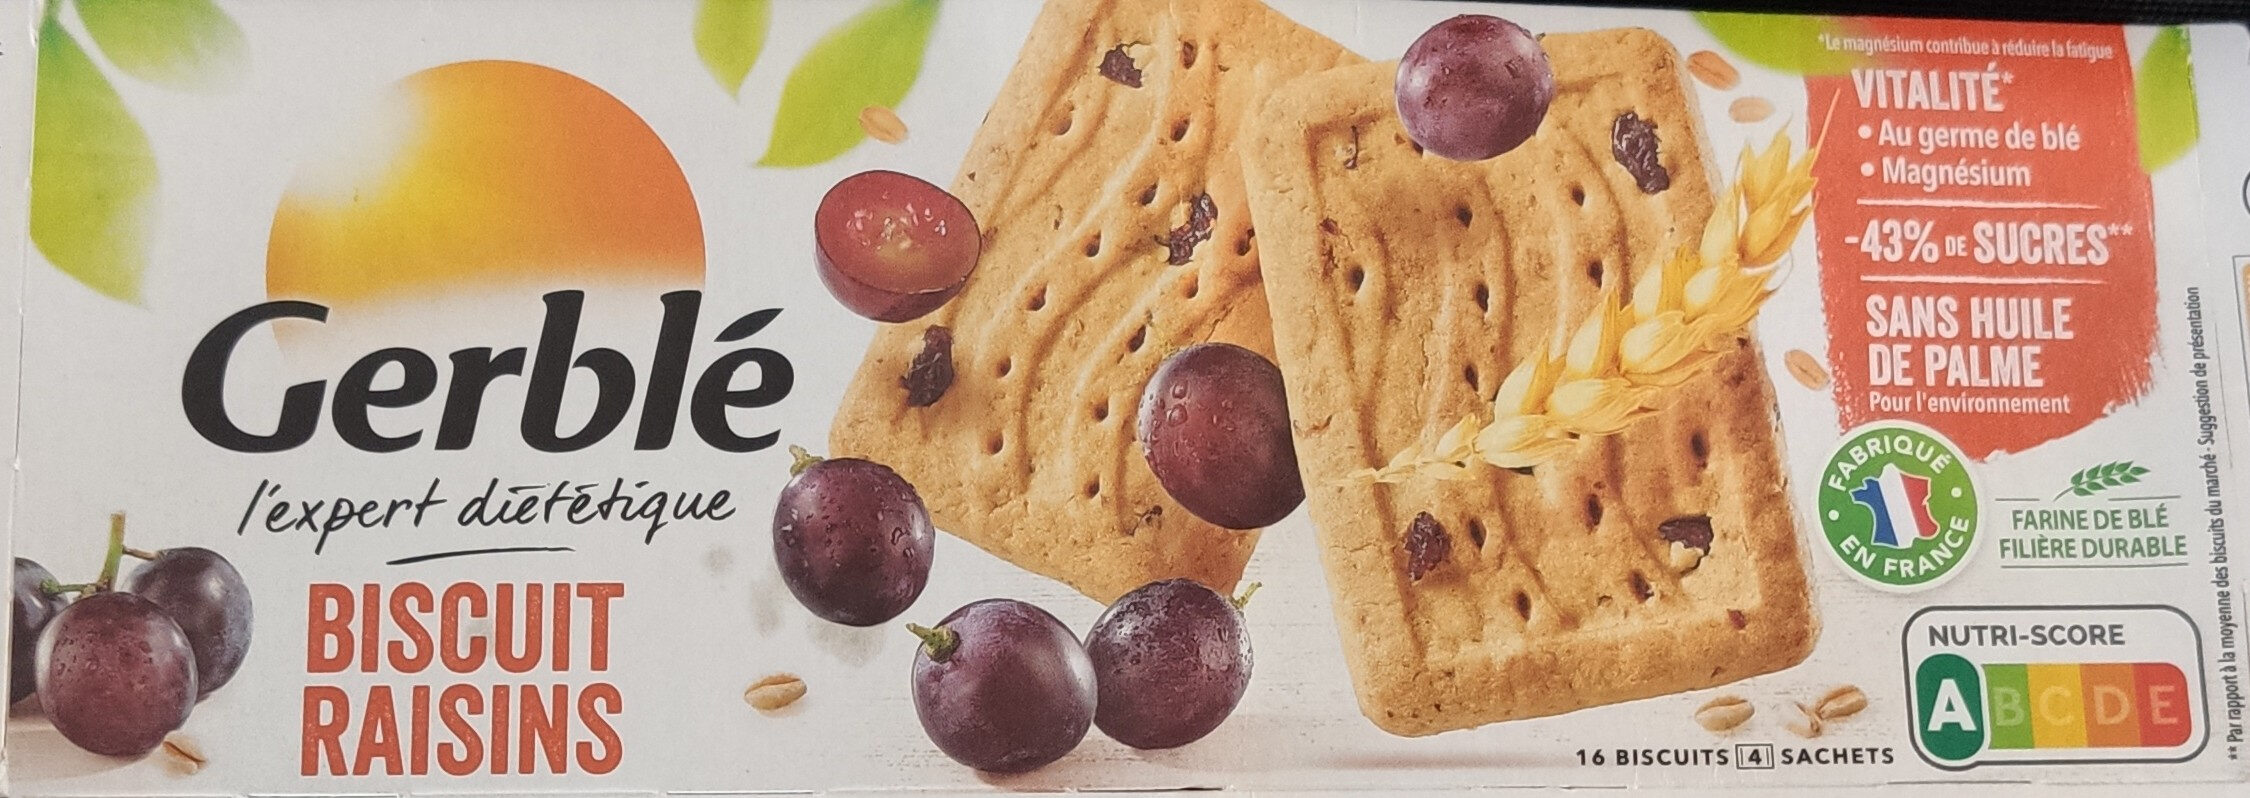 Biscuit raisins - Product - fr